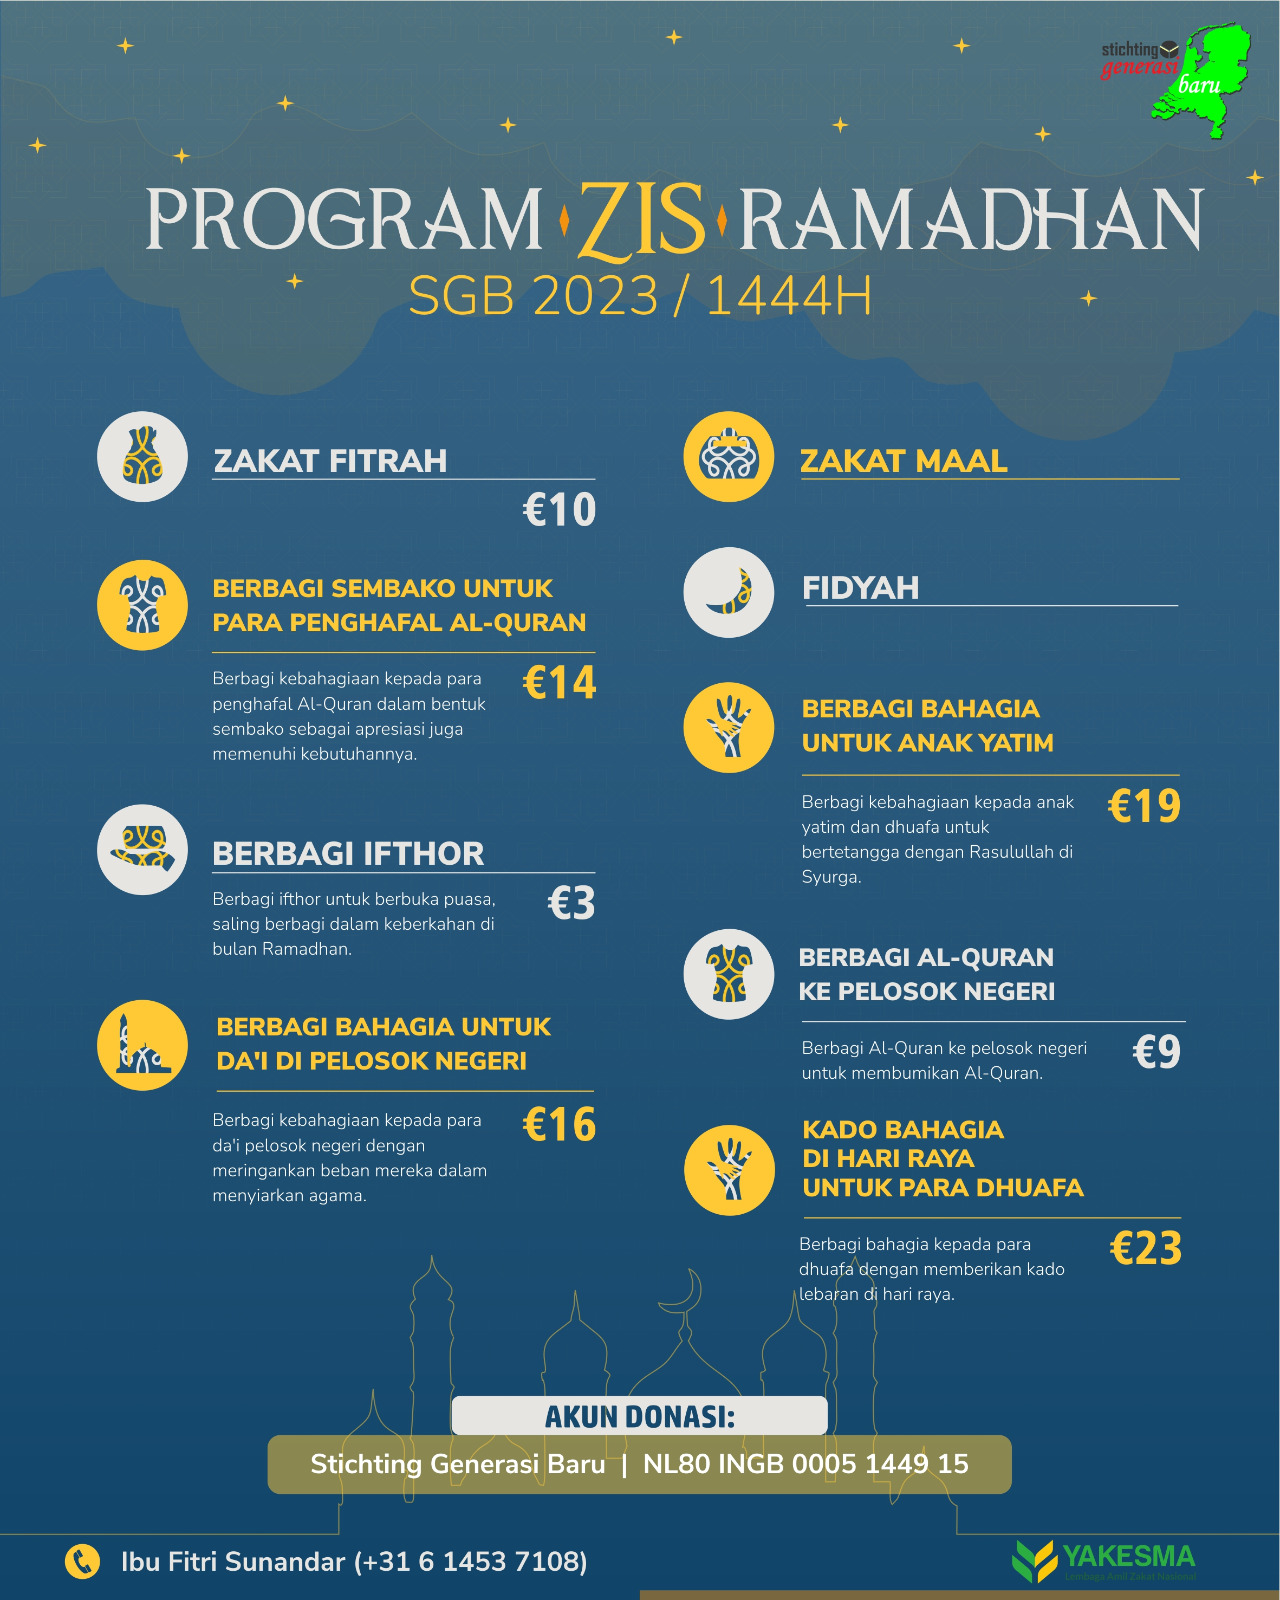 Program ZIS Ramadhan 2023 / 1444H